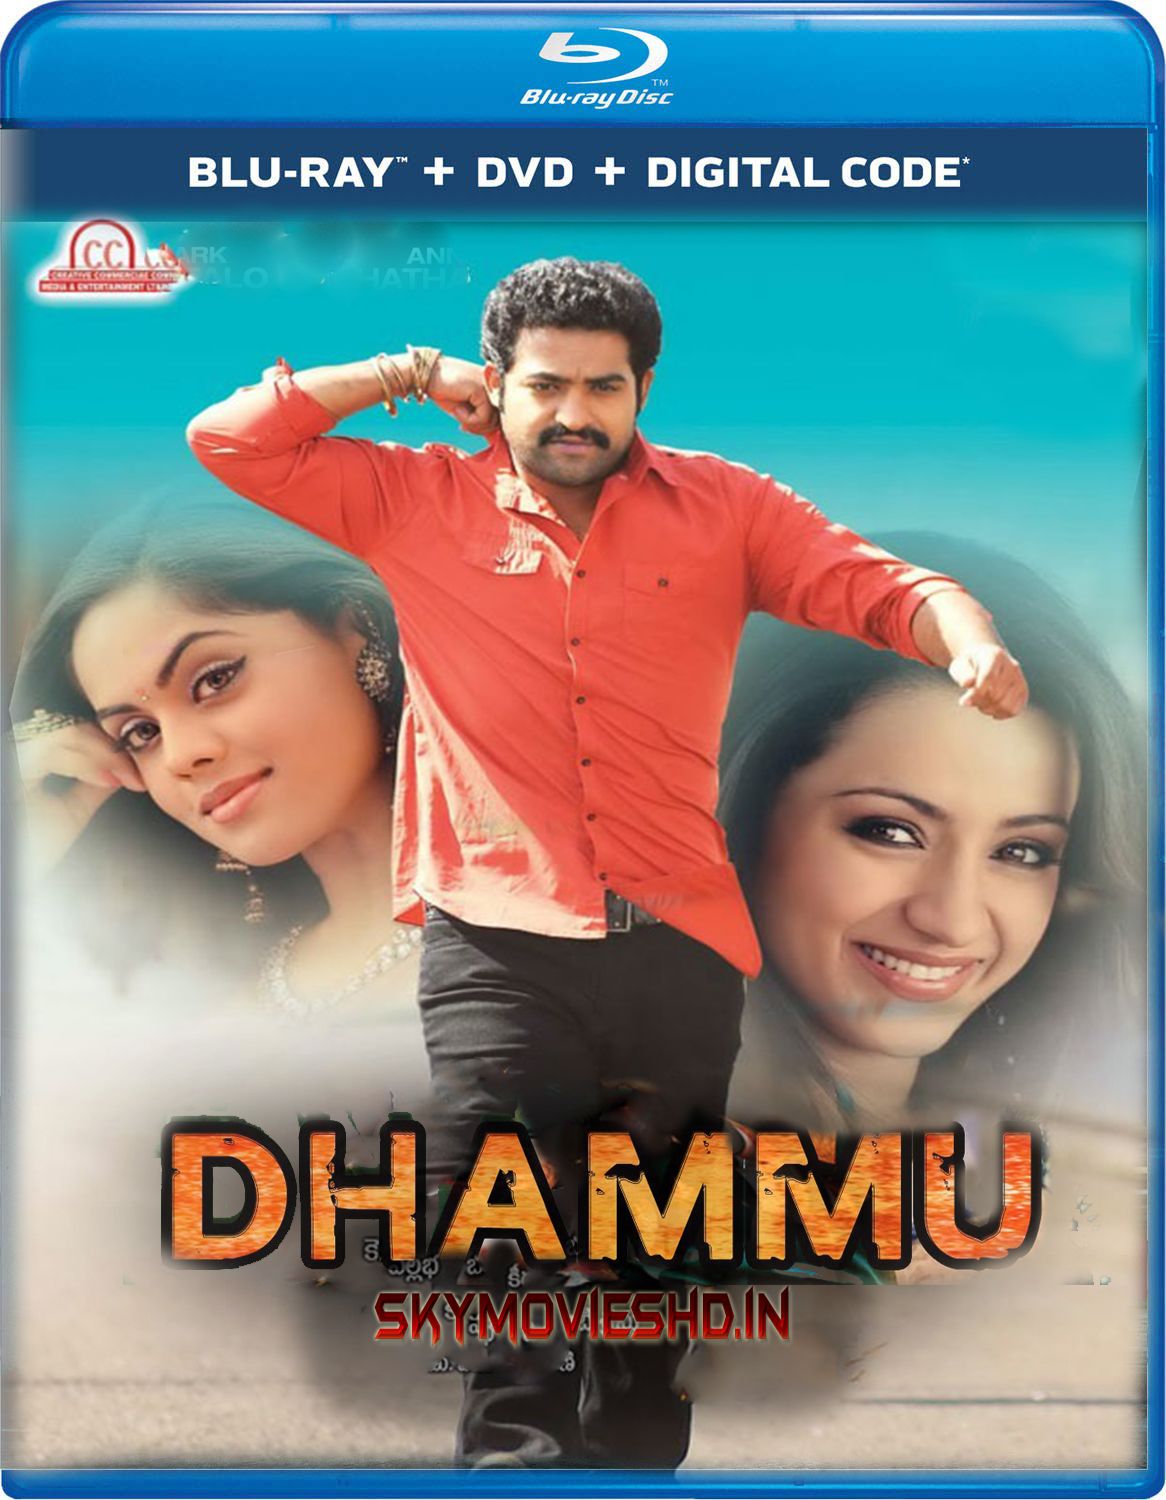 Dhammu (2013) Hindi Dubbed UNCUT BluRay download full movie